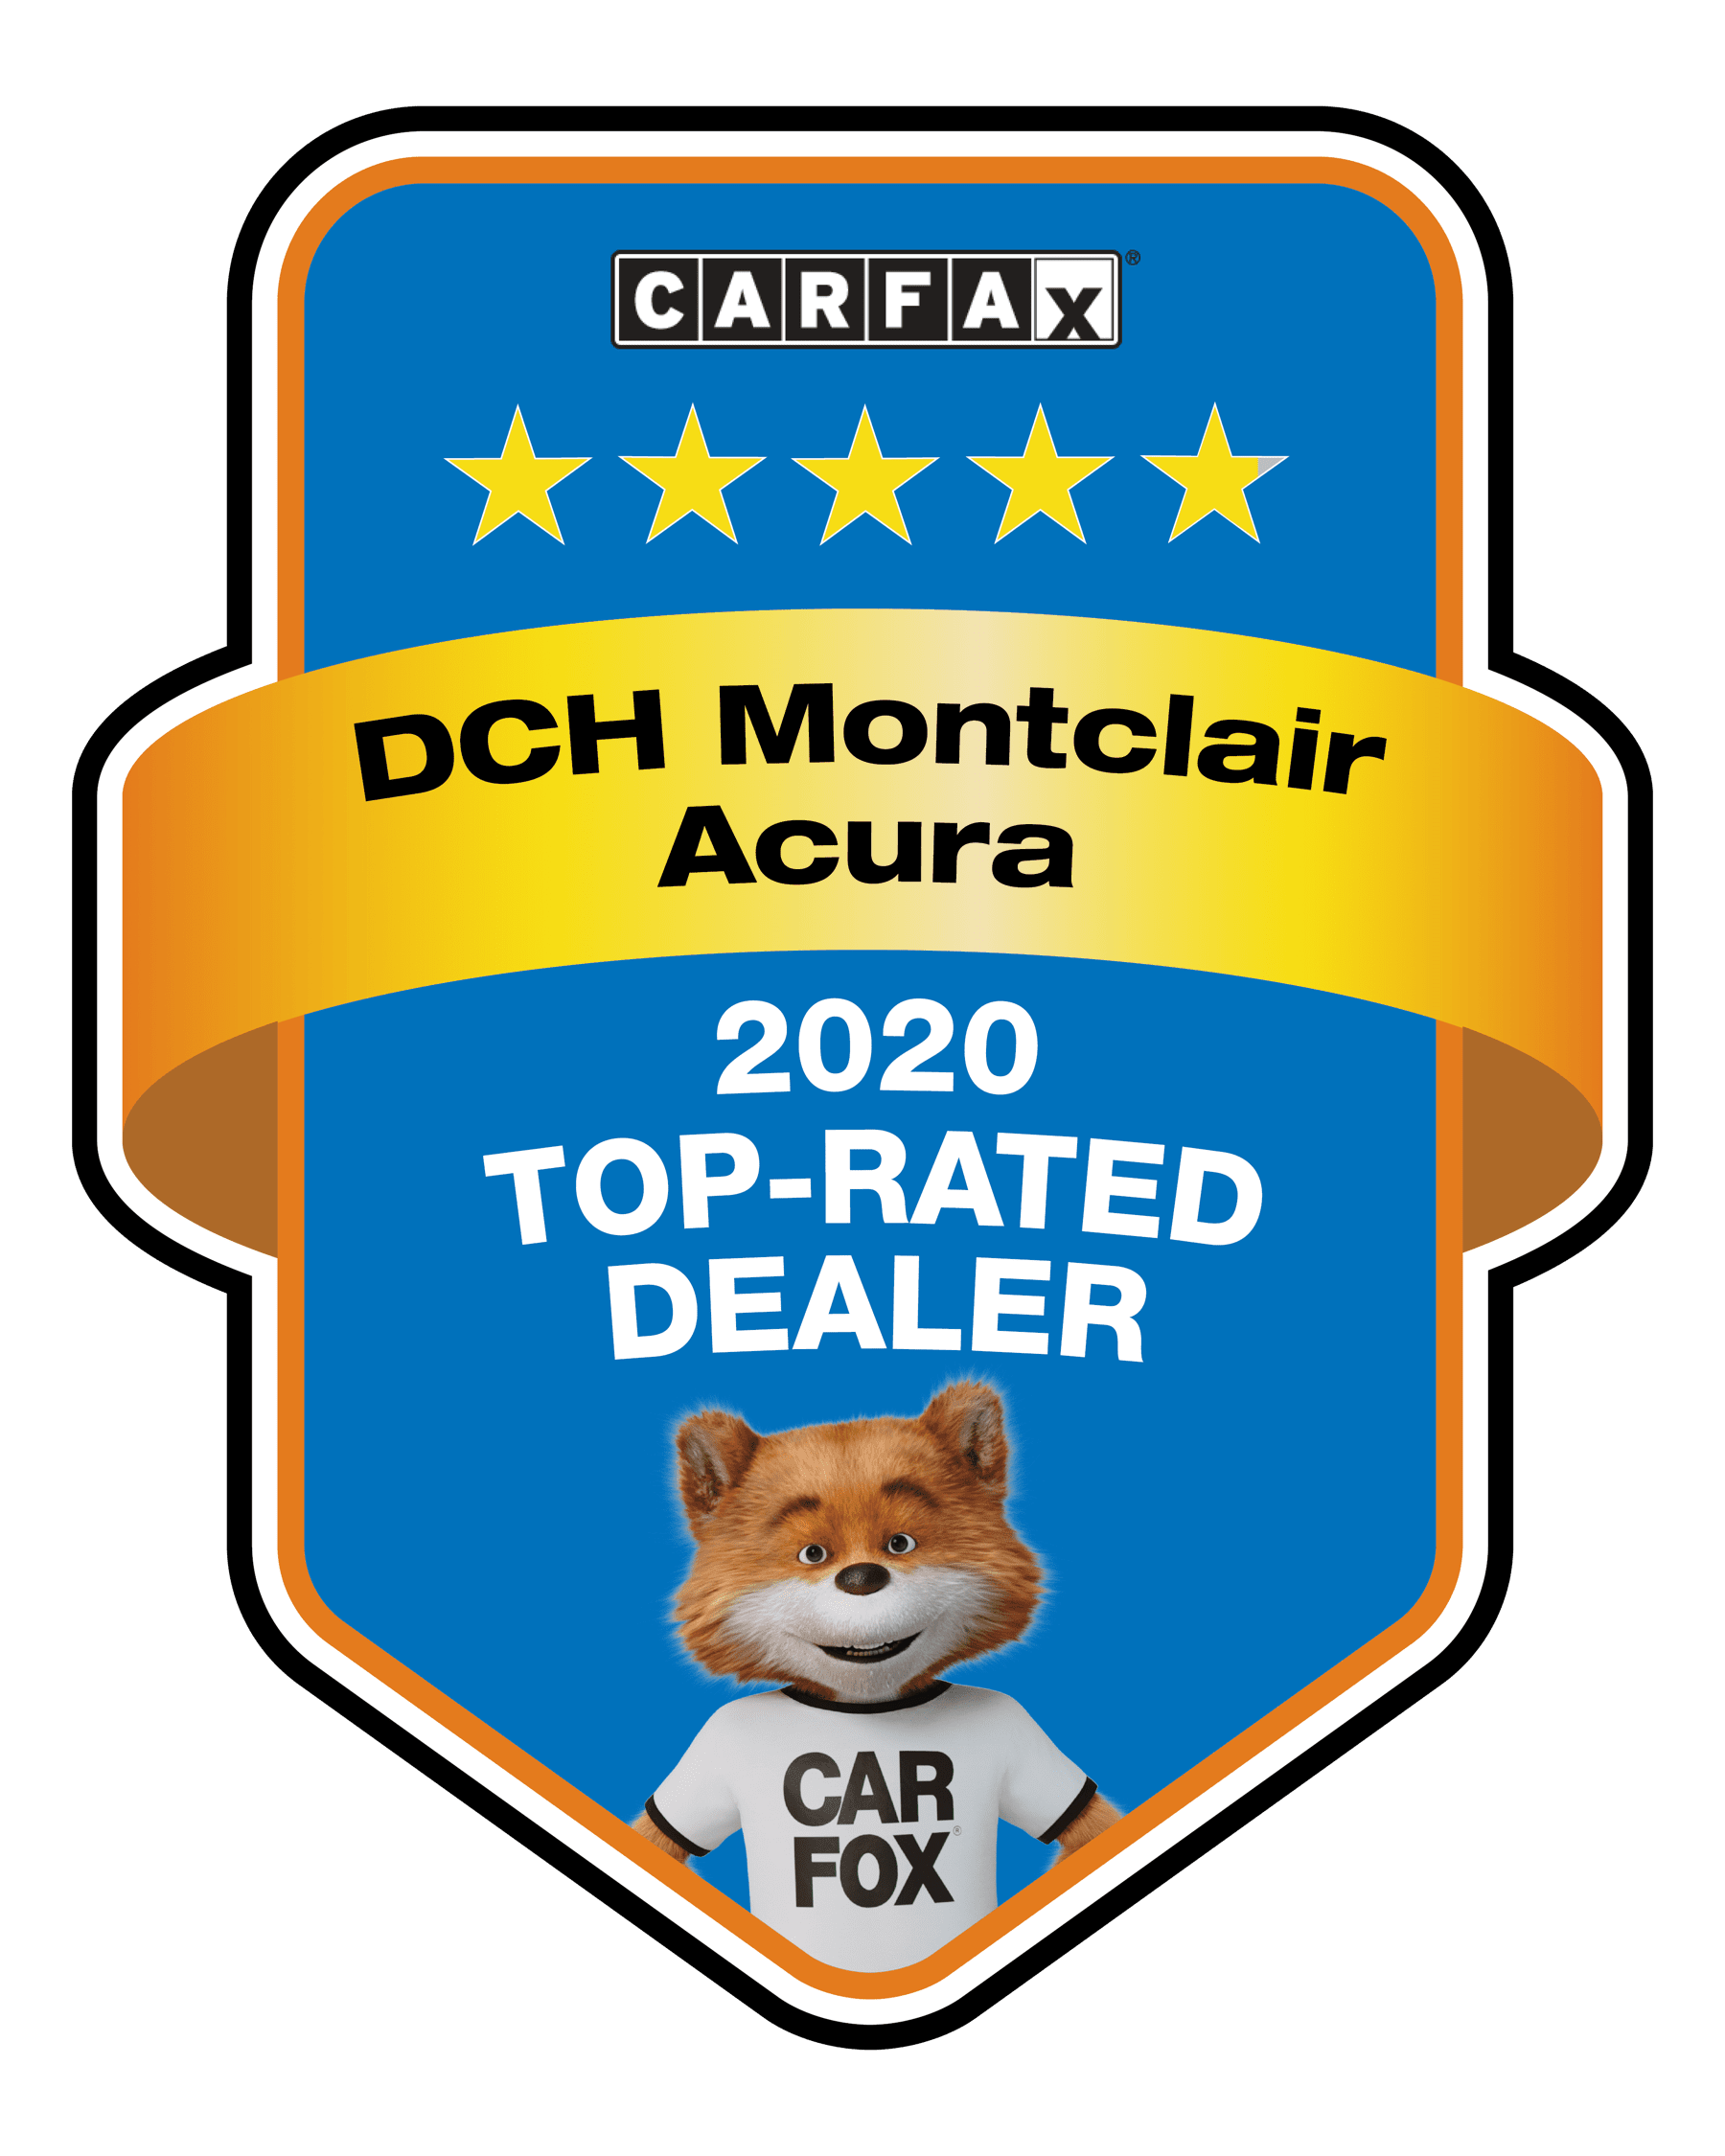 CarFox Top Rated Dealer 2020